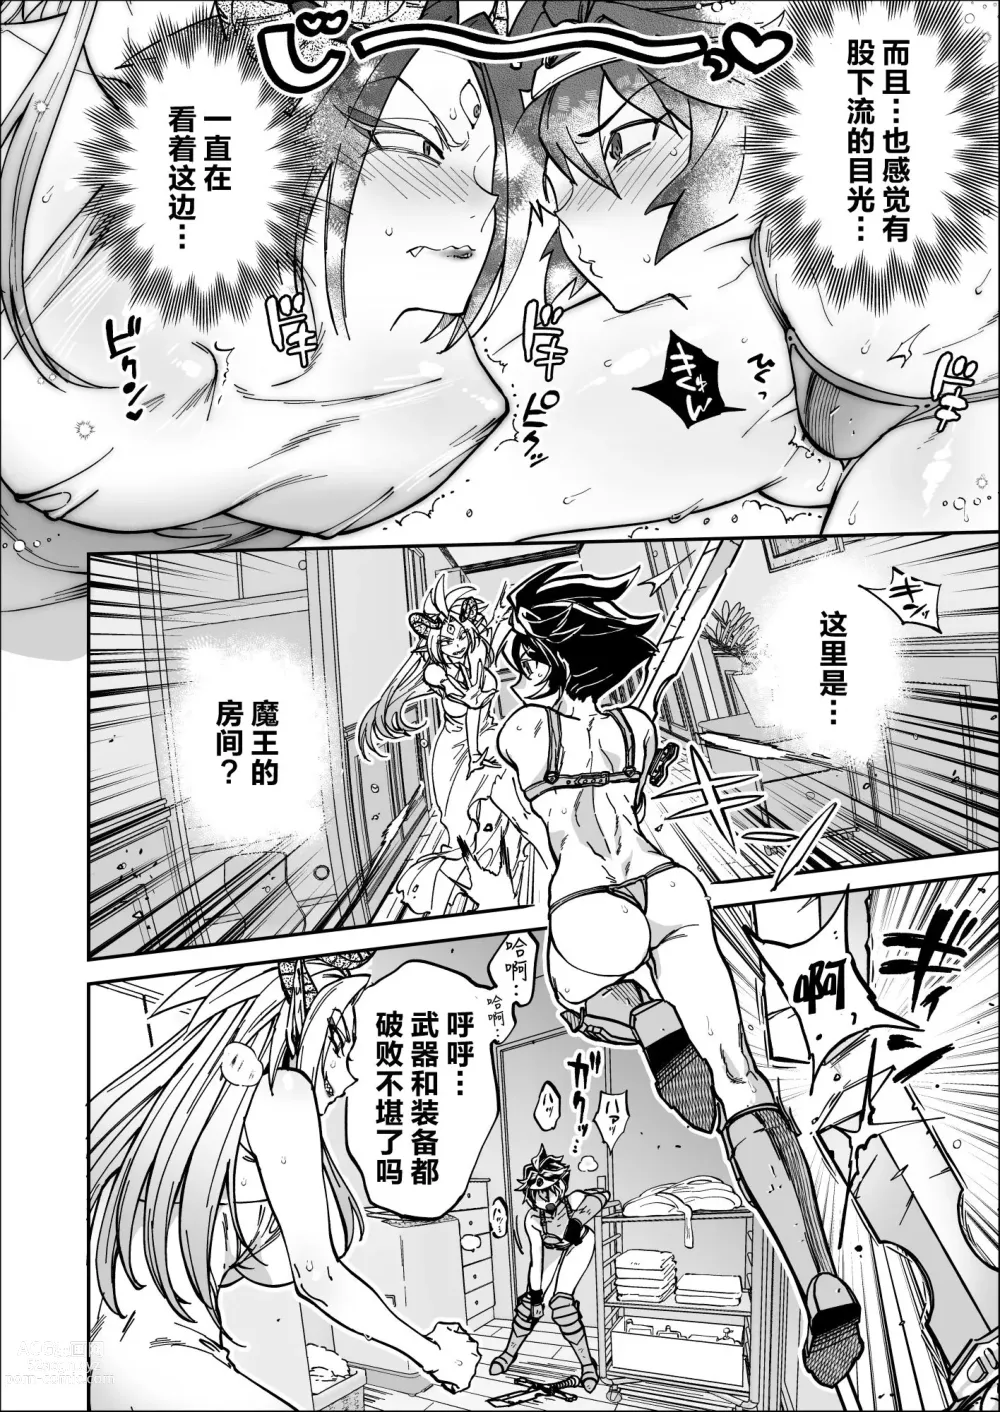 Page 8 of doujinshi 最终决战才见到对方正脸就恍神的勇者与魔王